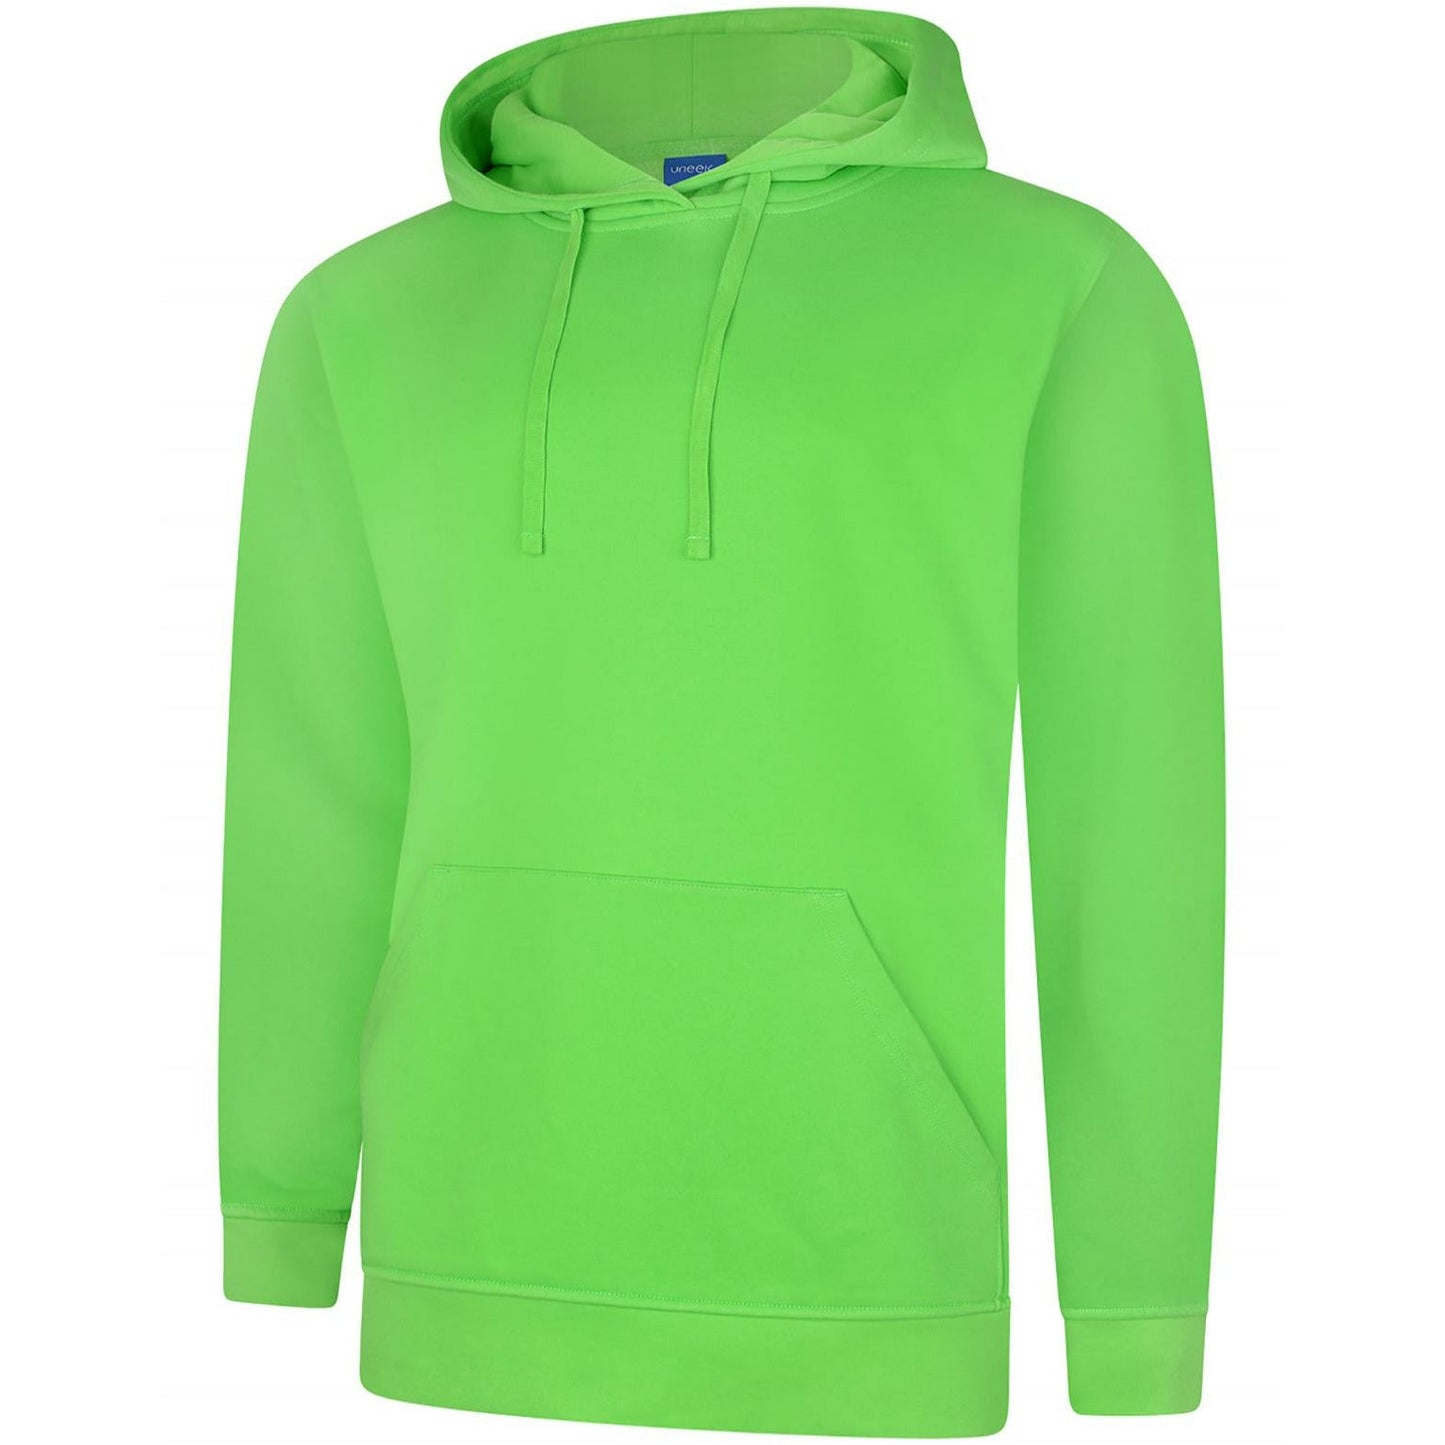 Deluxe Hooded Sweatshirt (L - 2XL) Lime Green